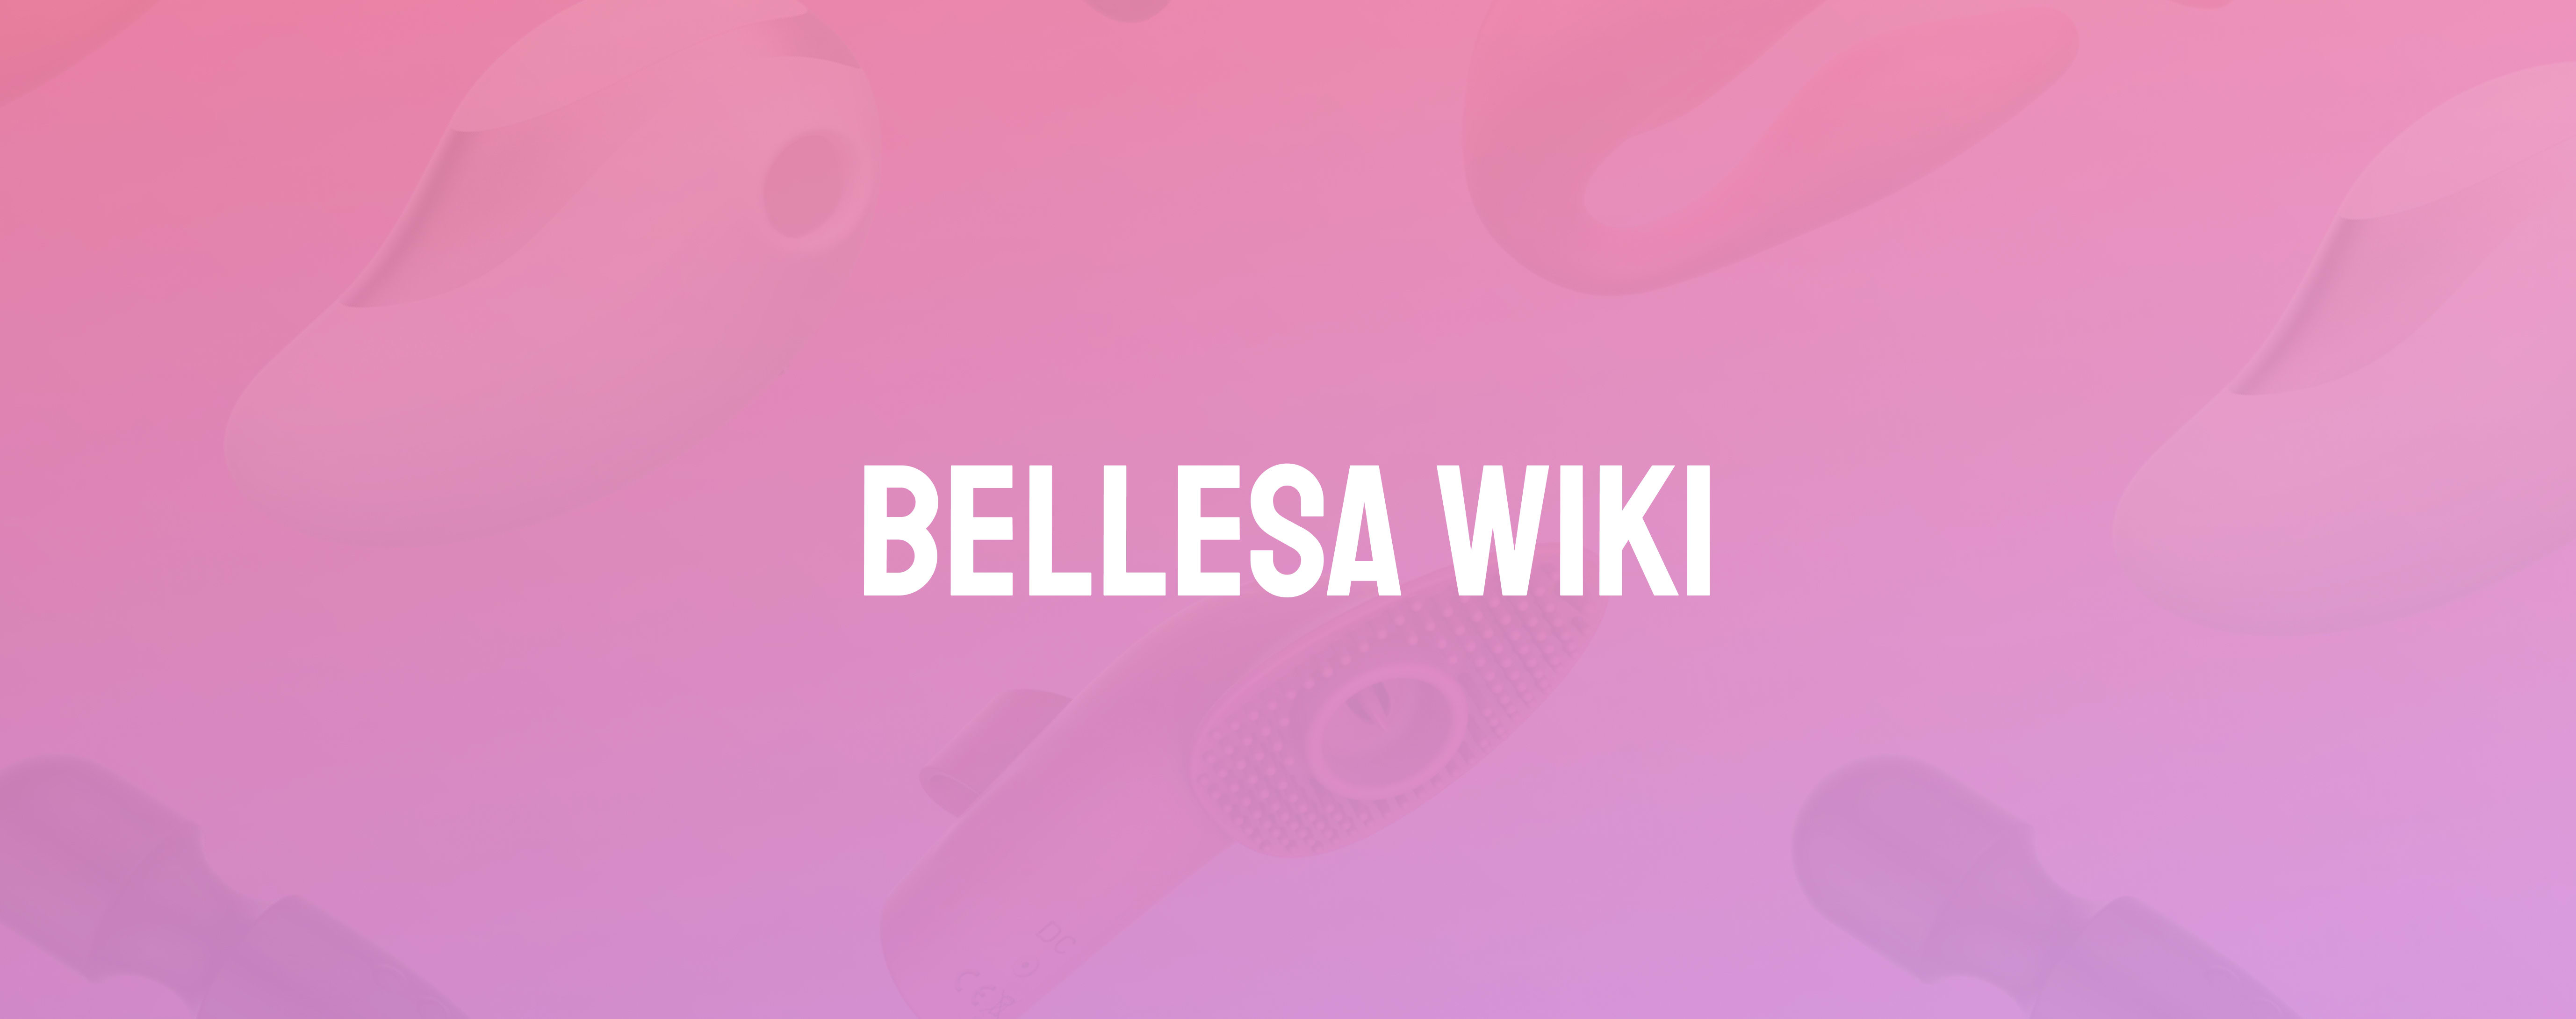 Sex Pronouns - Transgender - Bellesa Wiki | Bellesa - Porn for Women